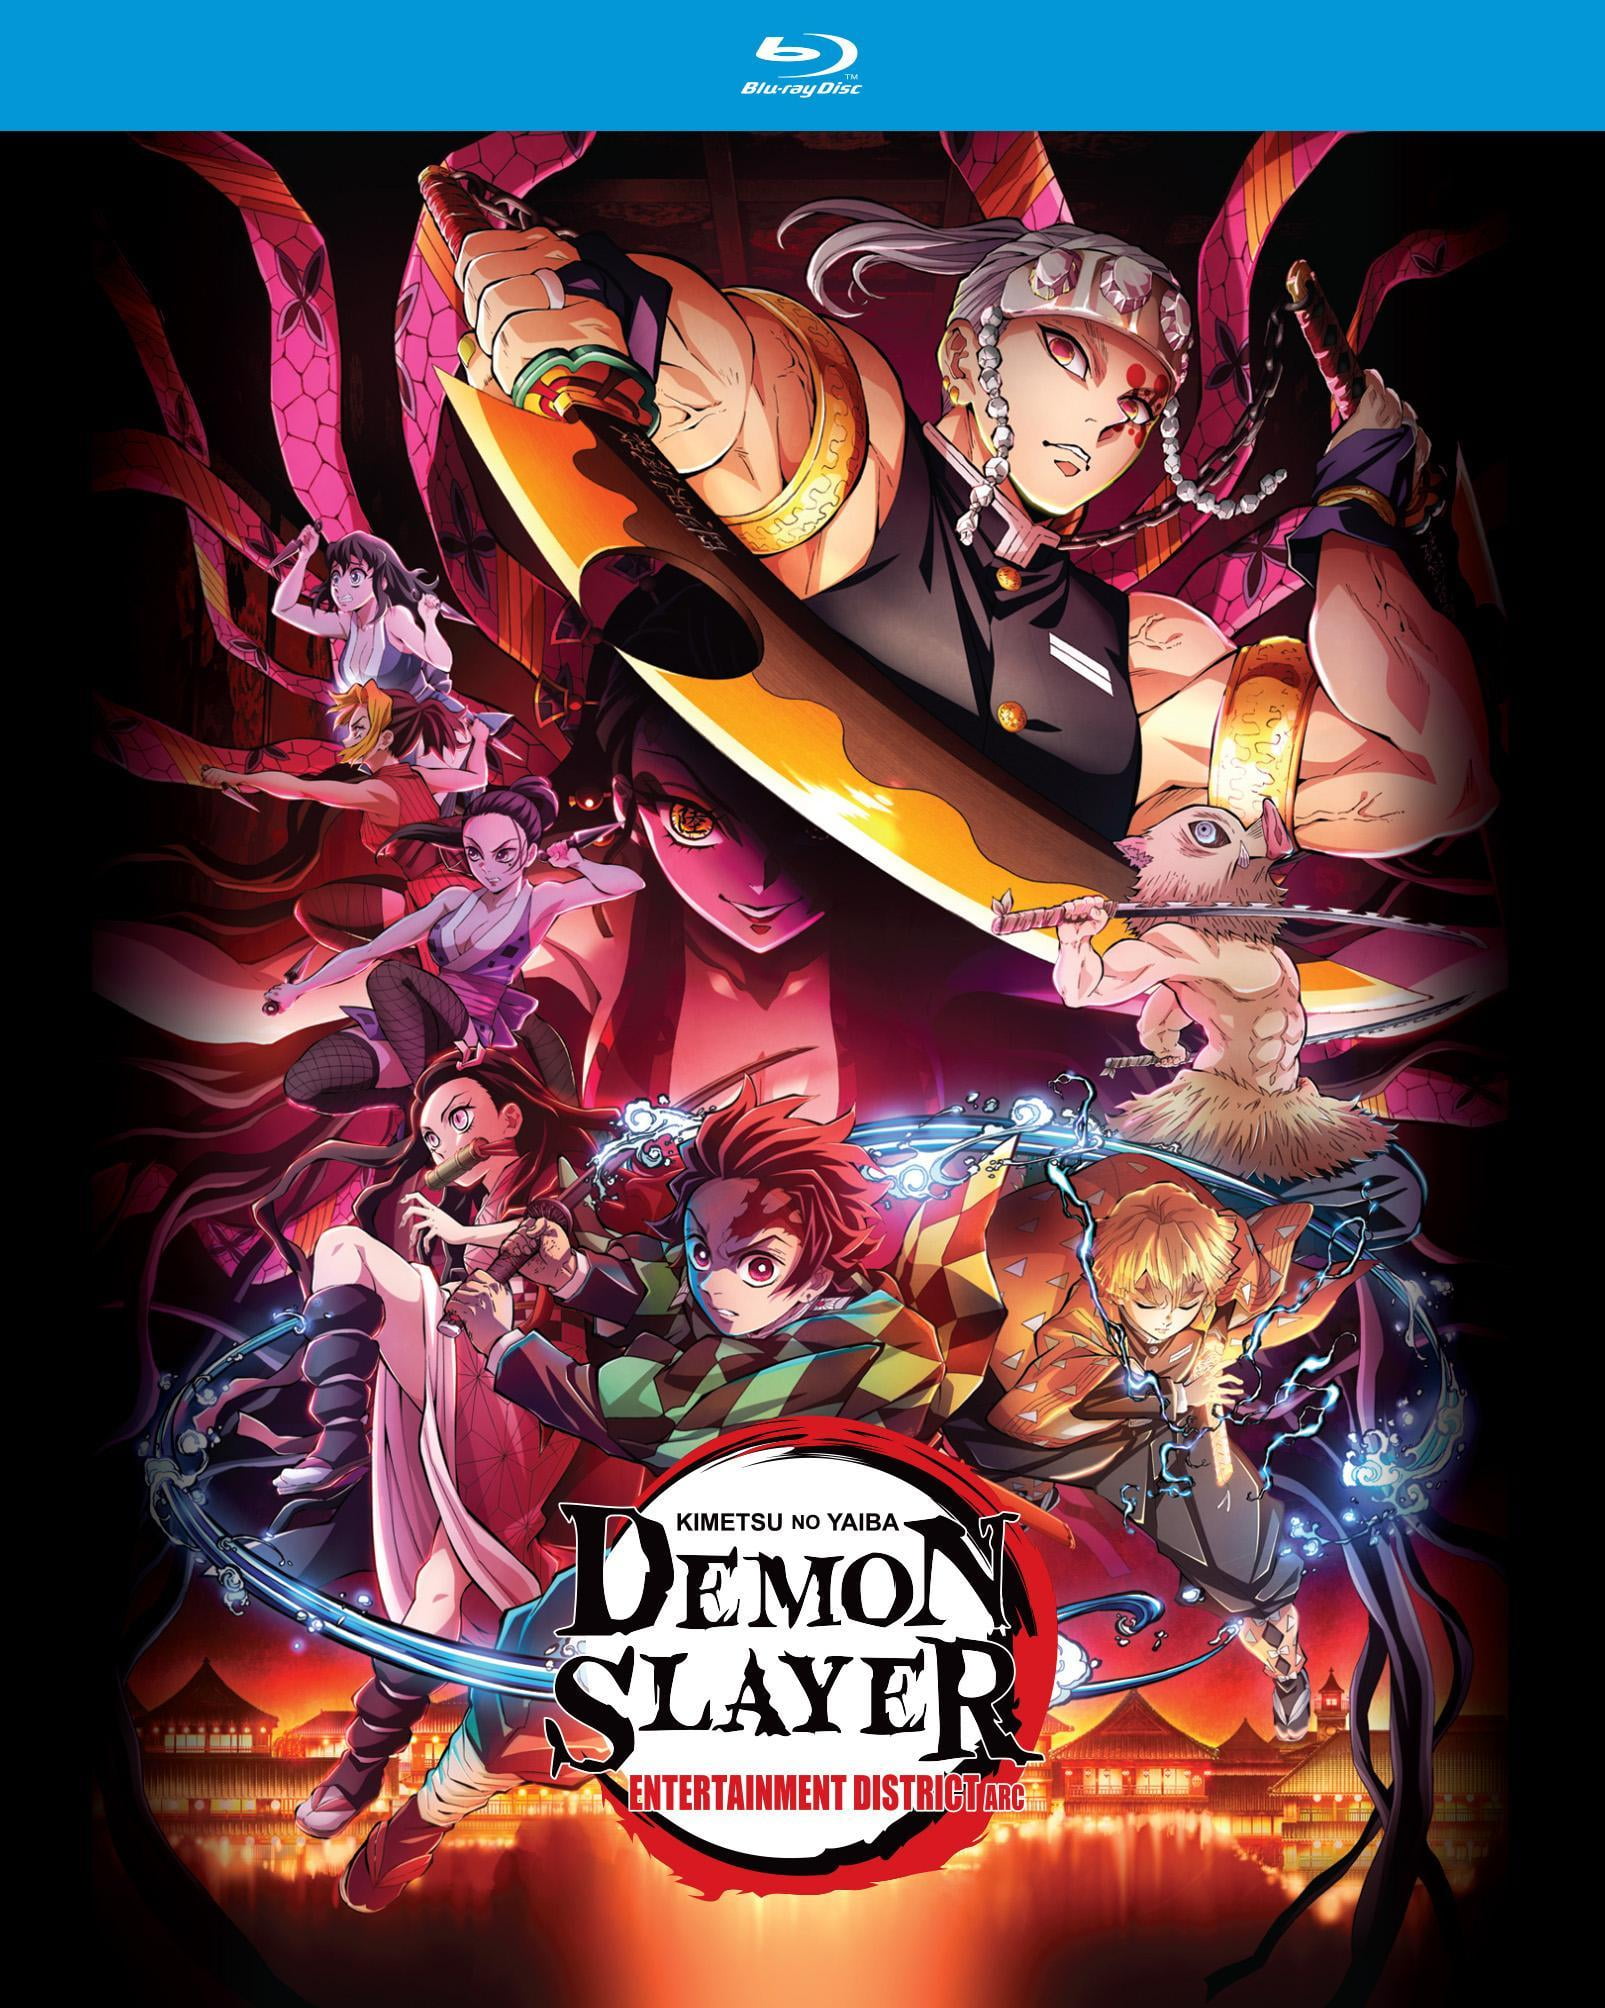 Demon Slayer: Kimetsu no Yaiba - Episode 1 of Demon Slayer: Kimetsu no  Yaiba Entertainment District Arc English Dub is streaming now on  Crunchyroll and Funimation! ⚡ 🌊 🐗